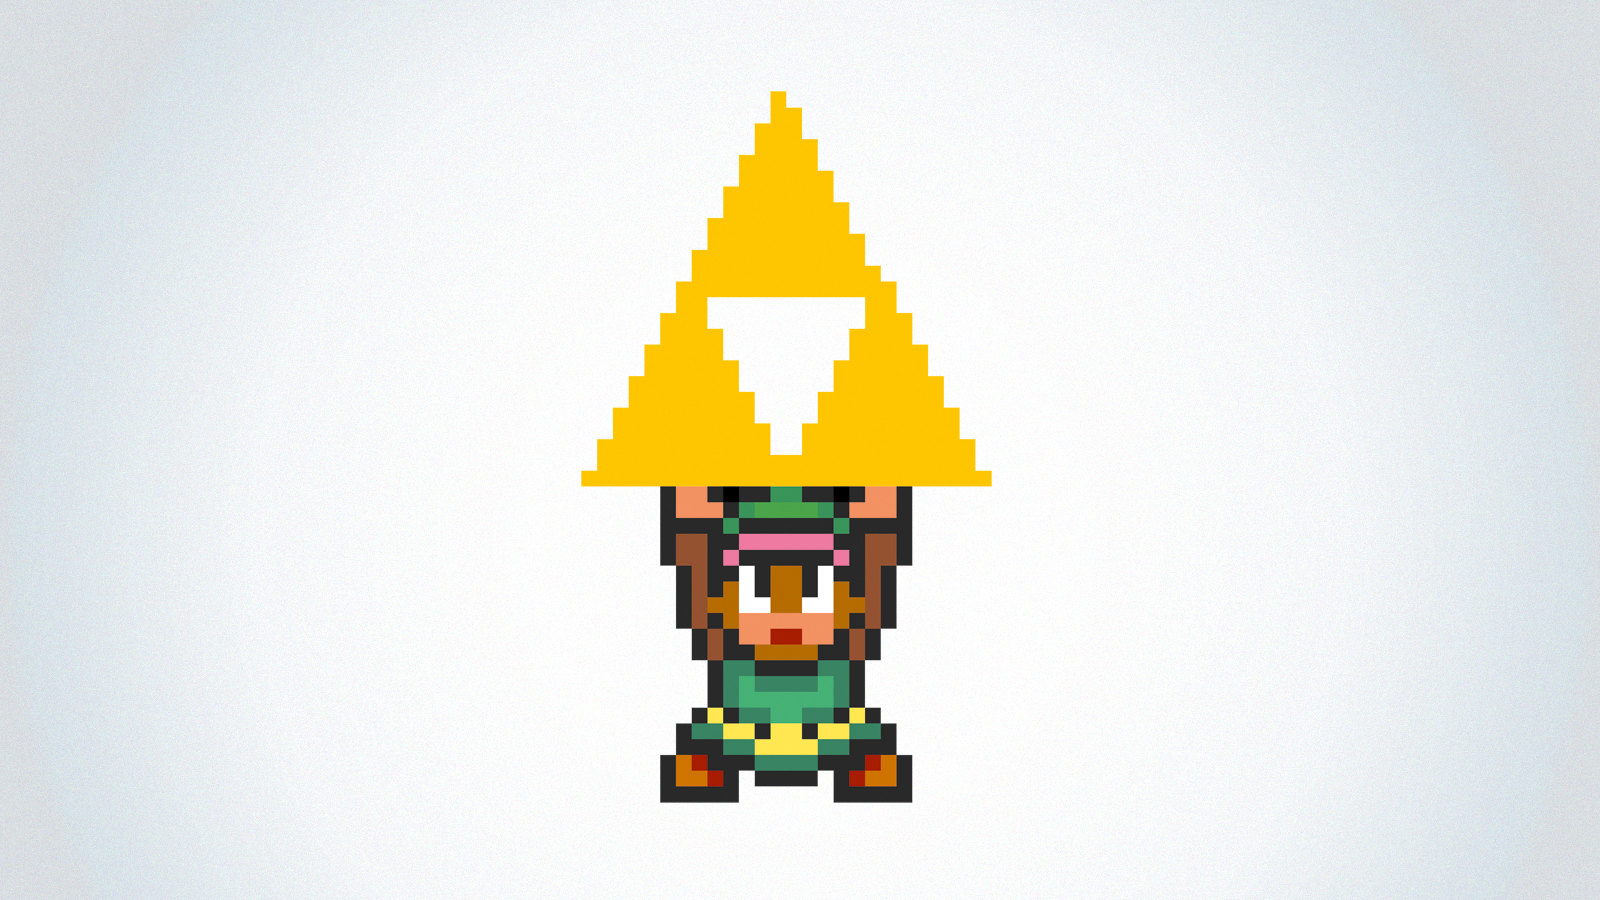 weird video game items - Triforce (The Legend of Zelda series)